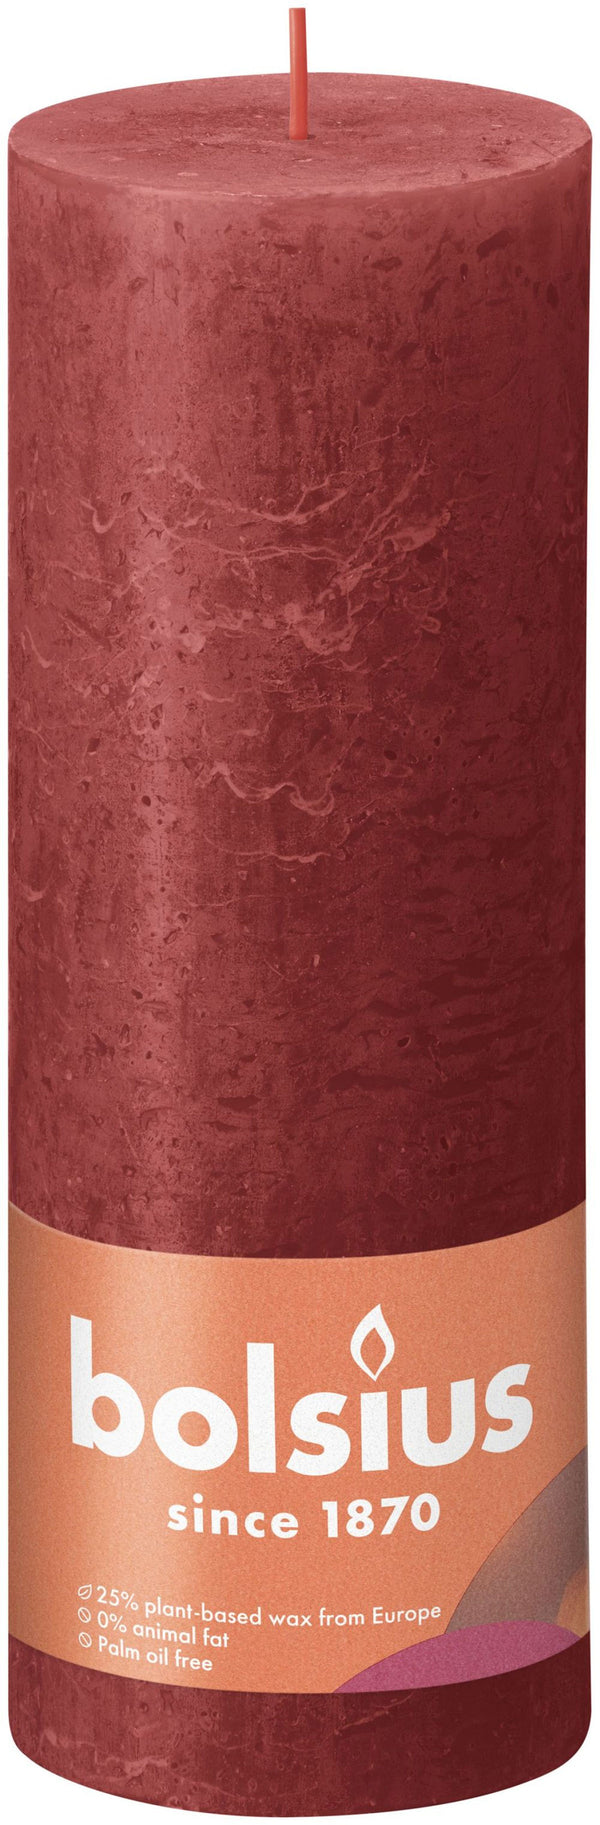 Bolsius Kaars 19x6,8 cm Rood